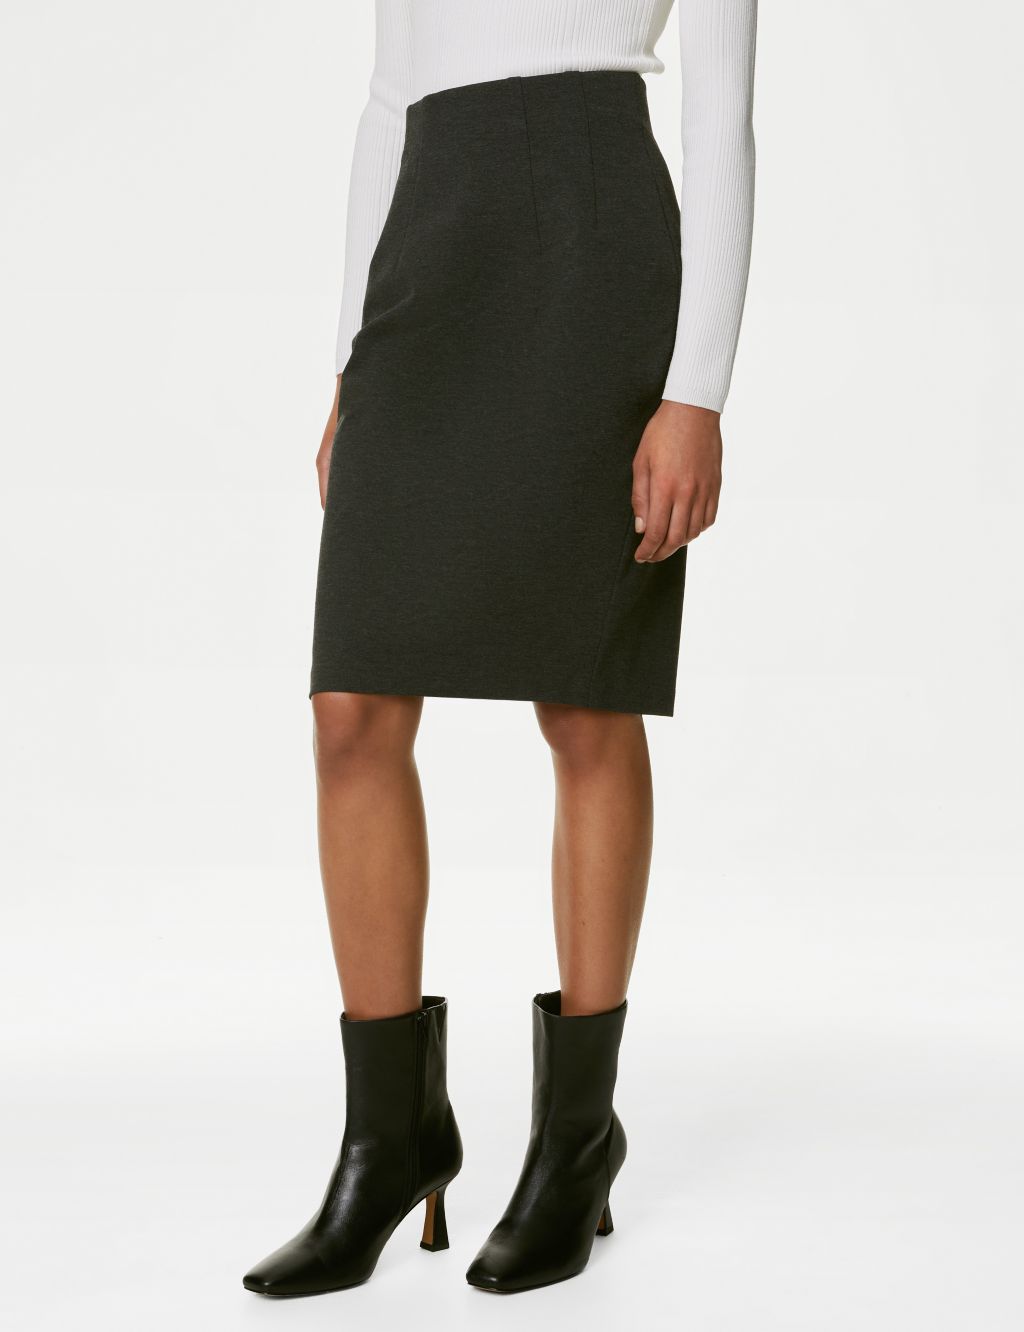 Jersey Knee Length Pencil Skirt image 3